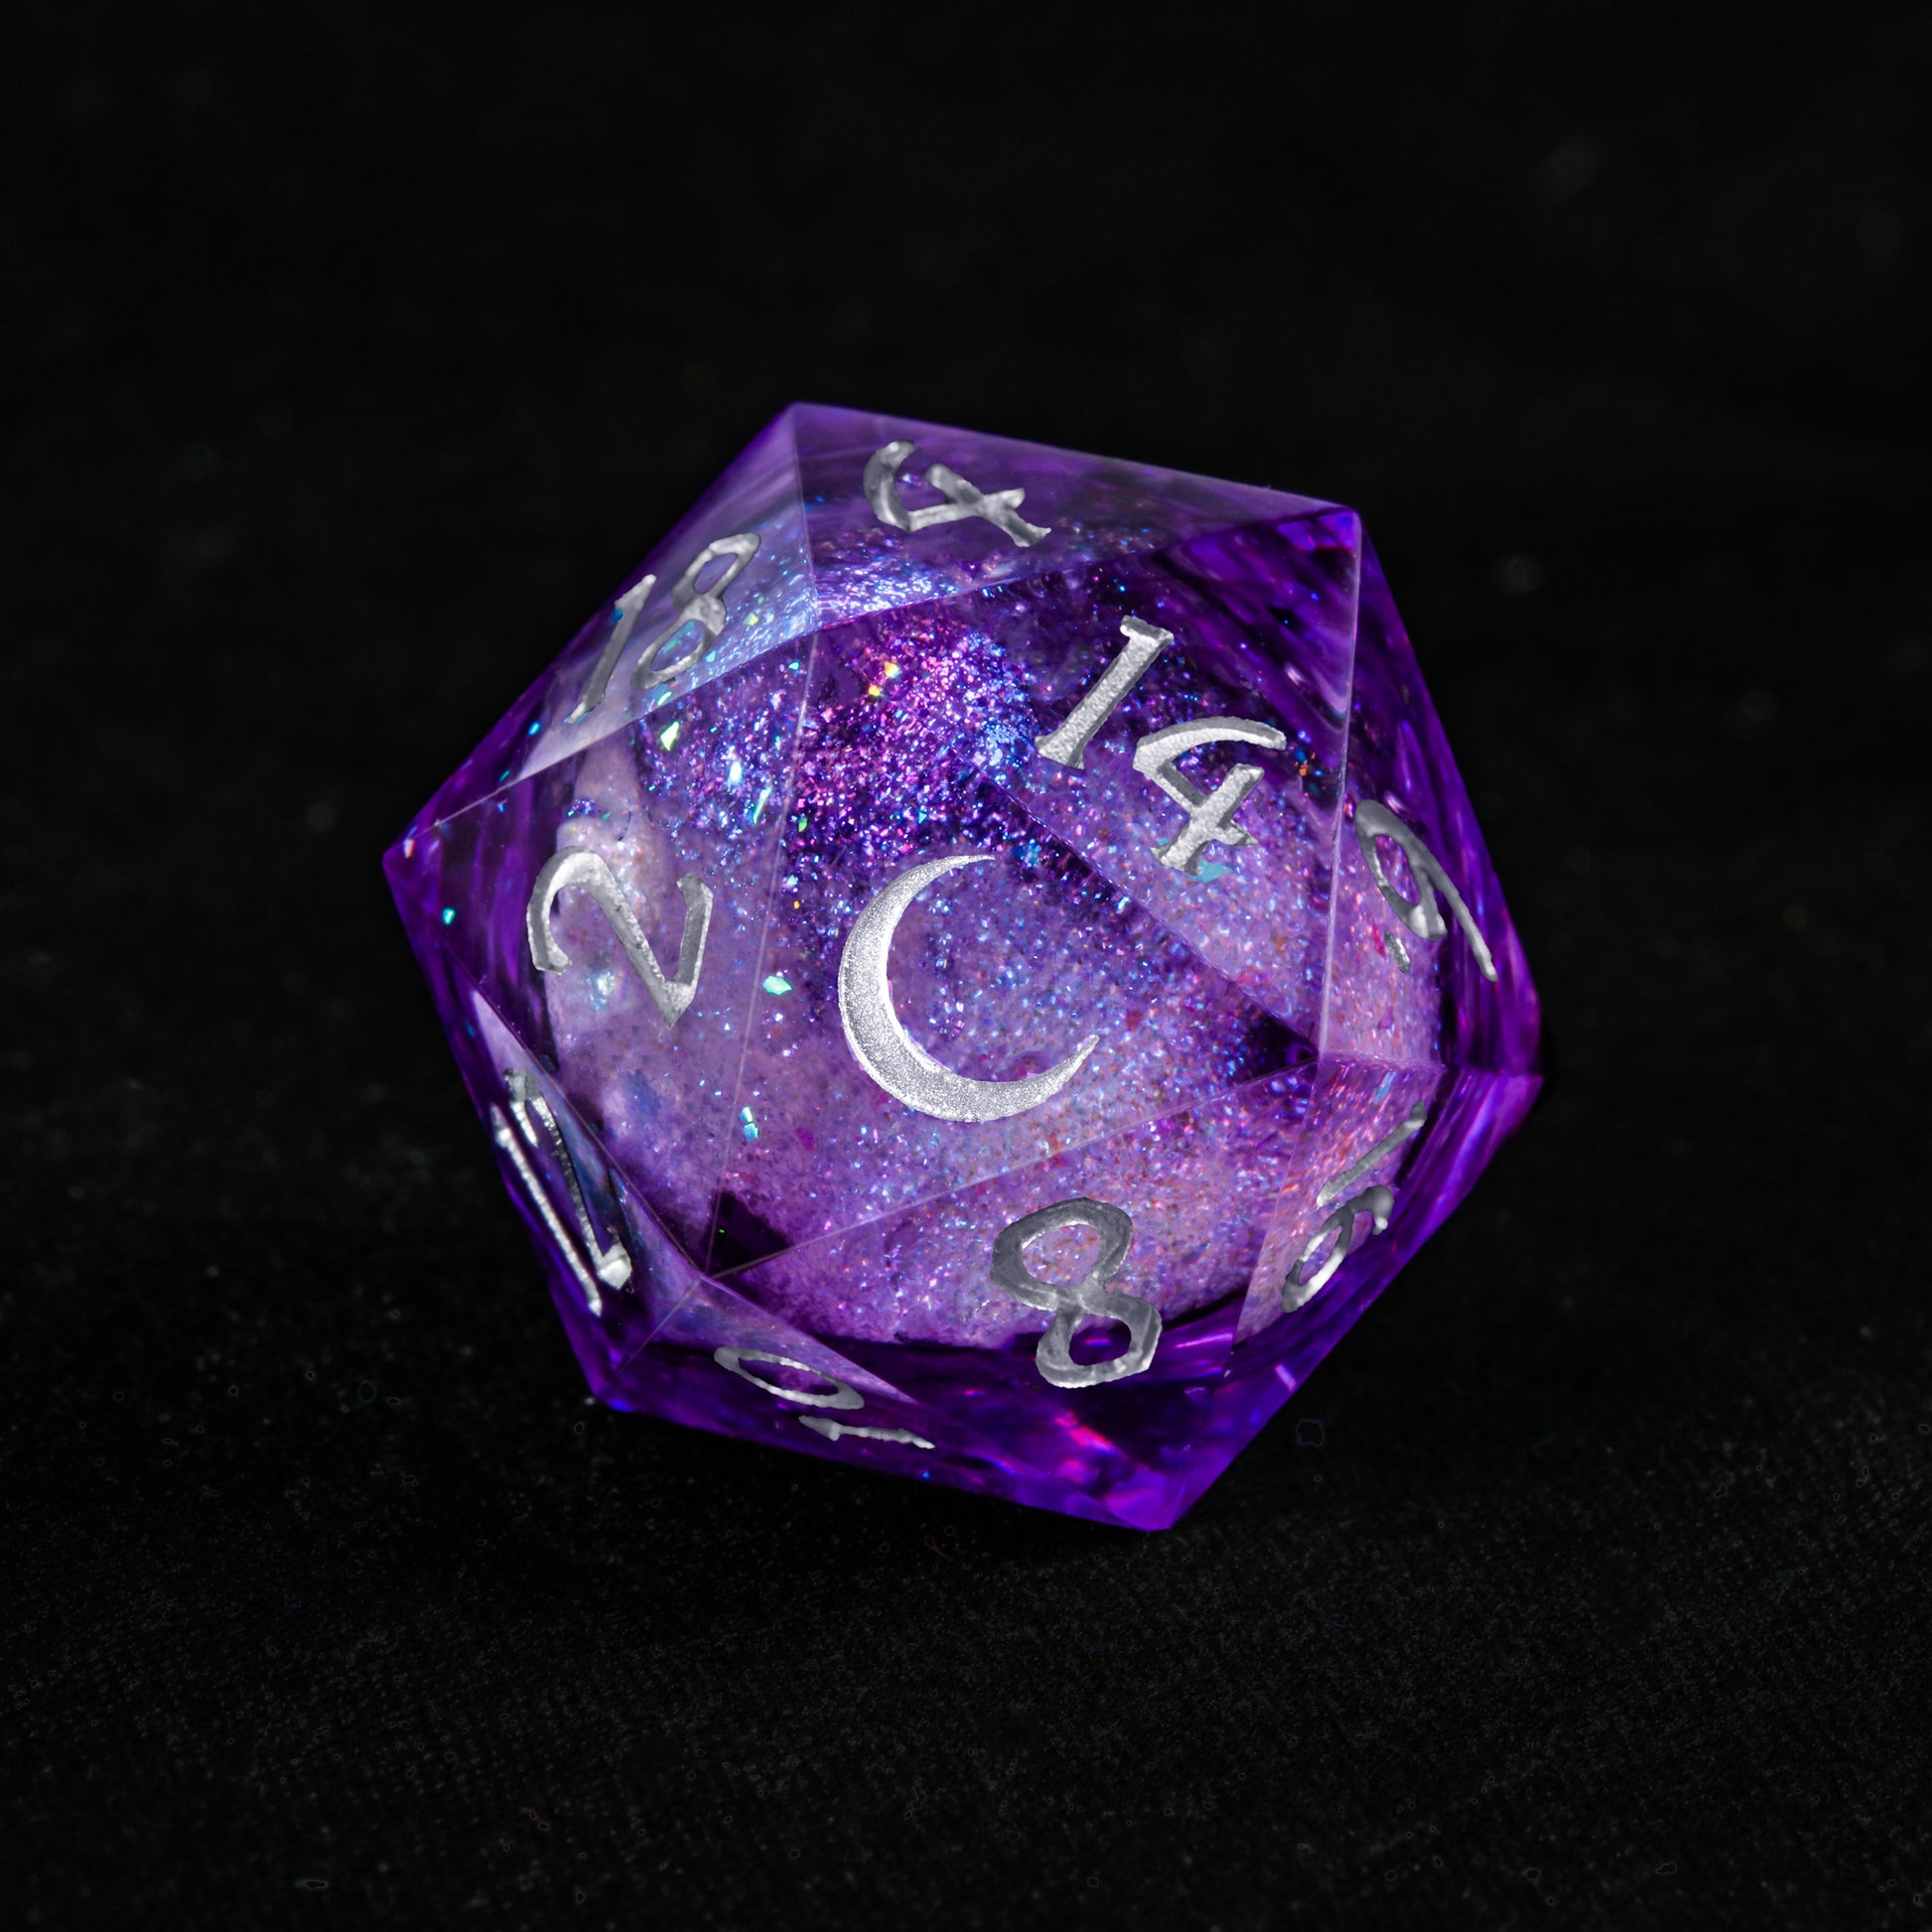 Purple Liquid Core Galaxy Dice Moon DnD D&D Dice Set - CrystalMaggie